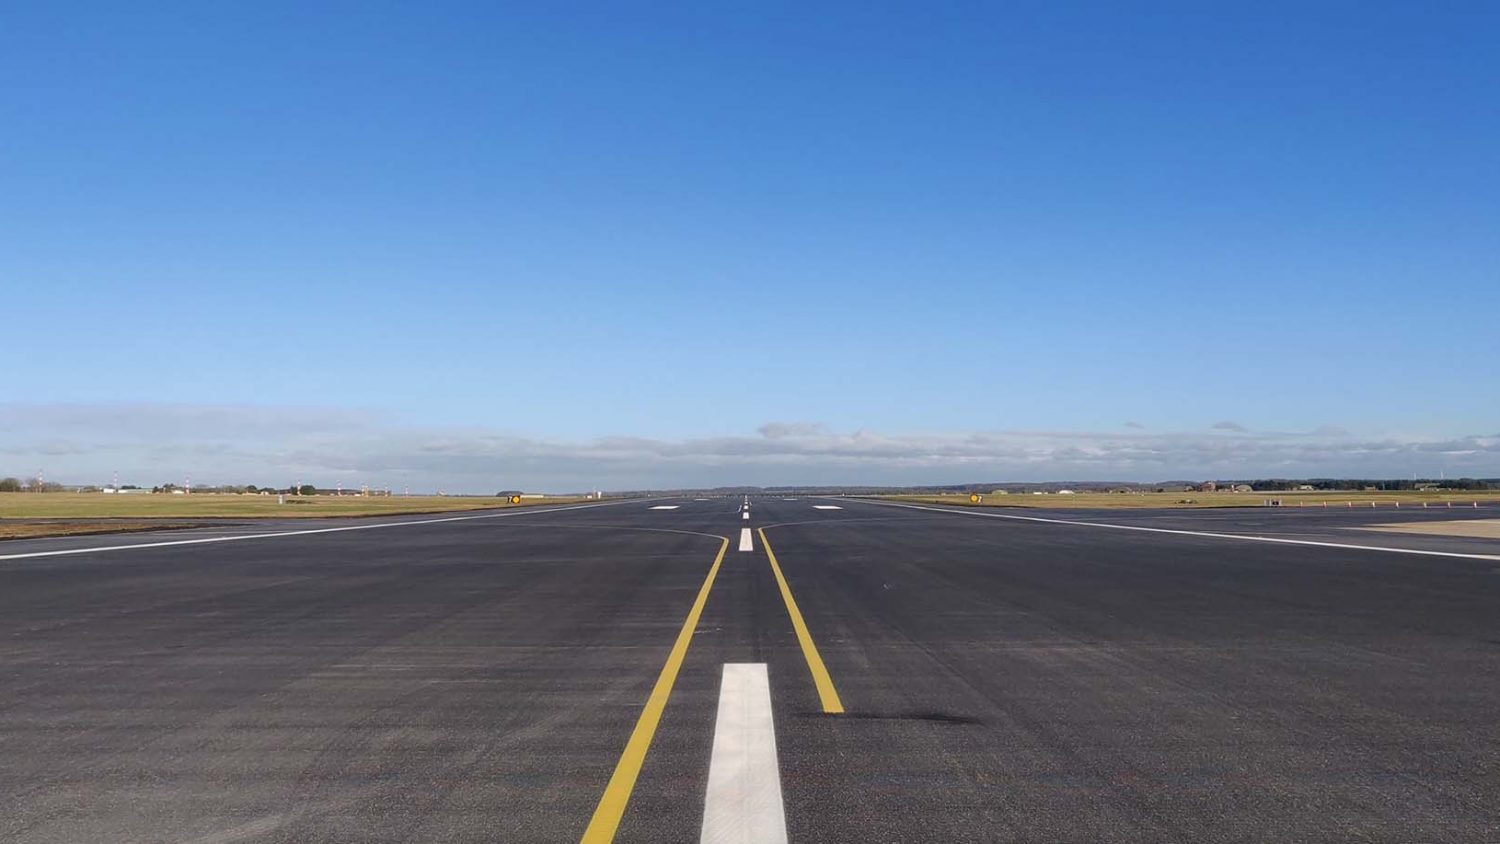 RAF Marham, New Runway & Hangar